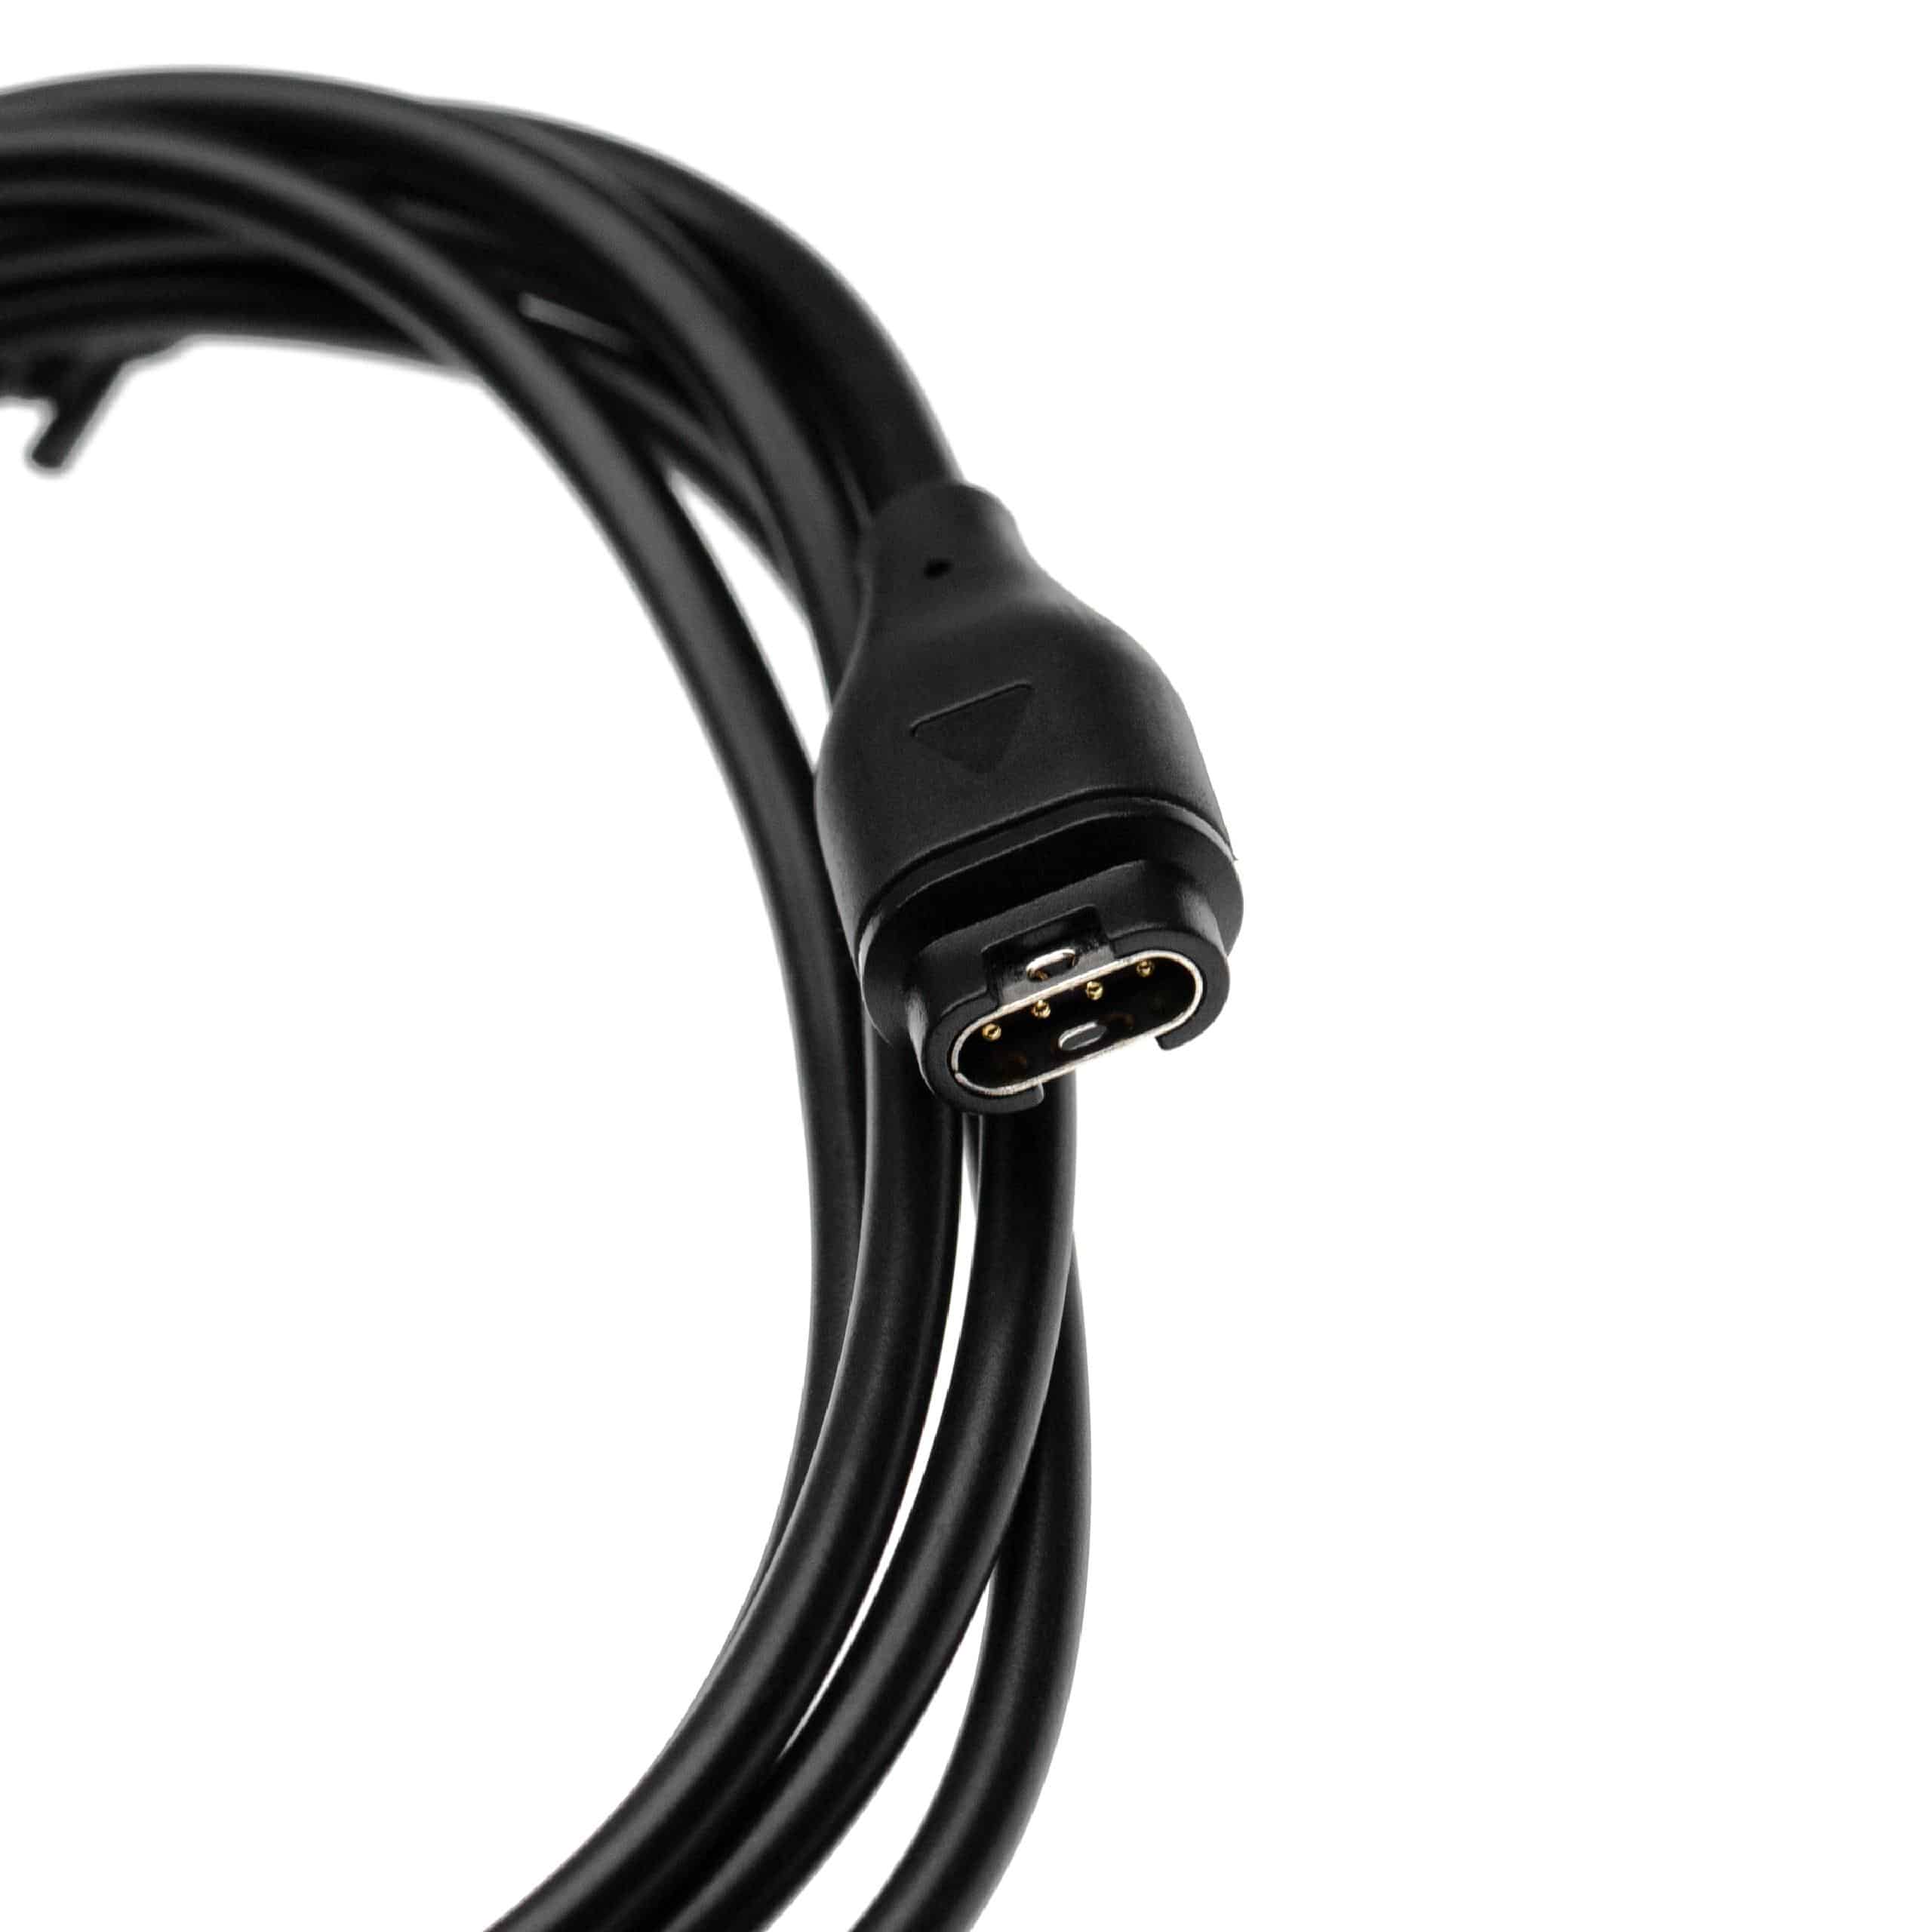 Cable de carga USB para smartwatch - negro 100 cm